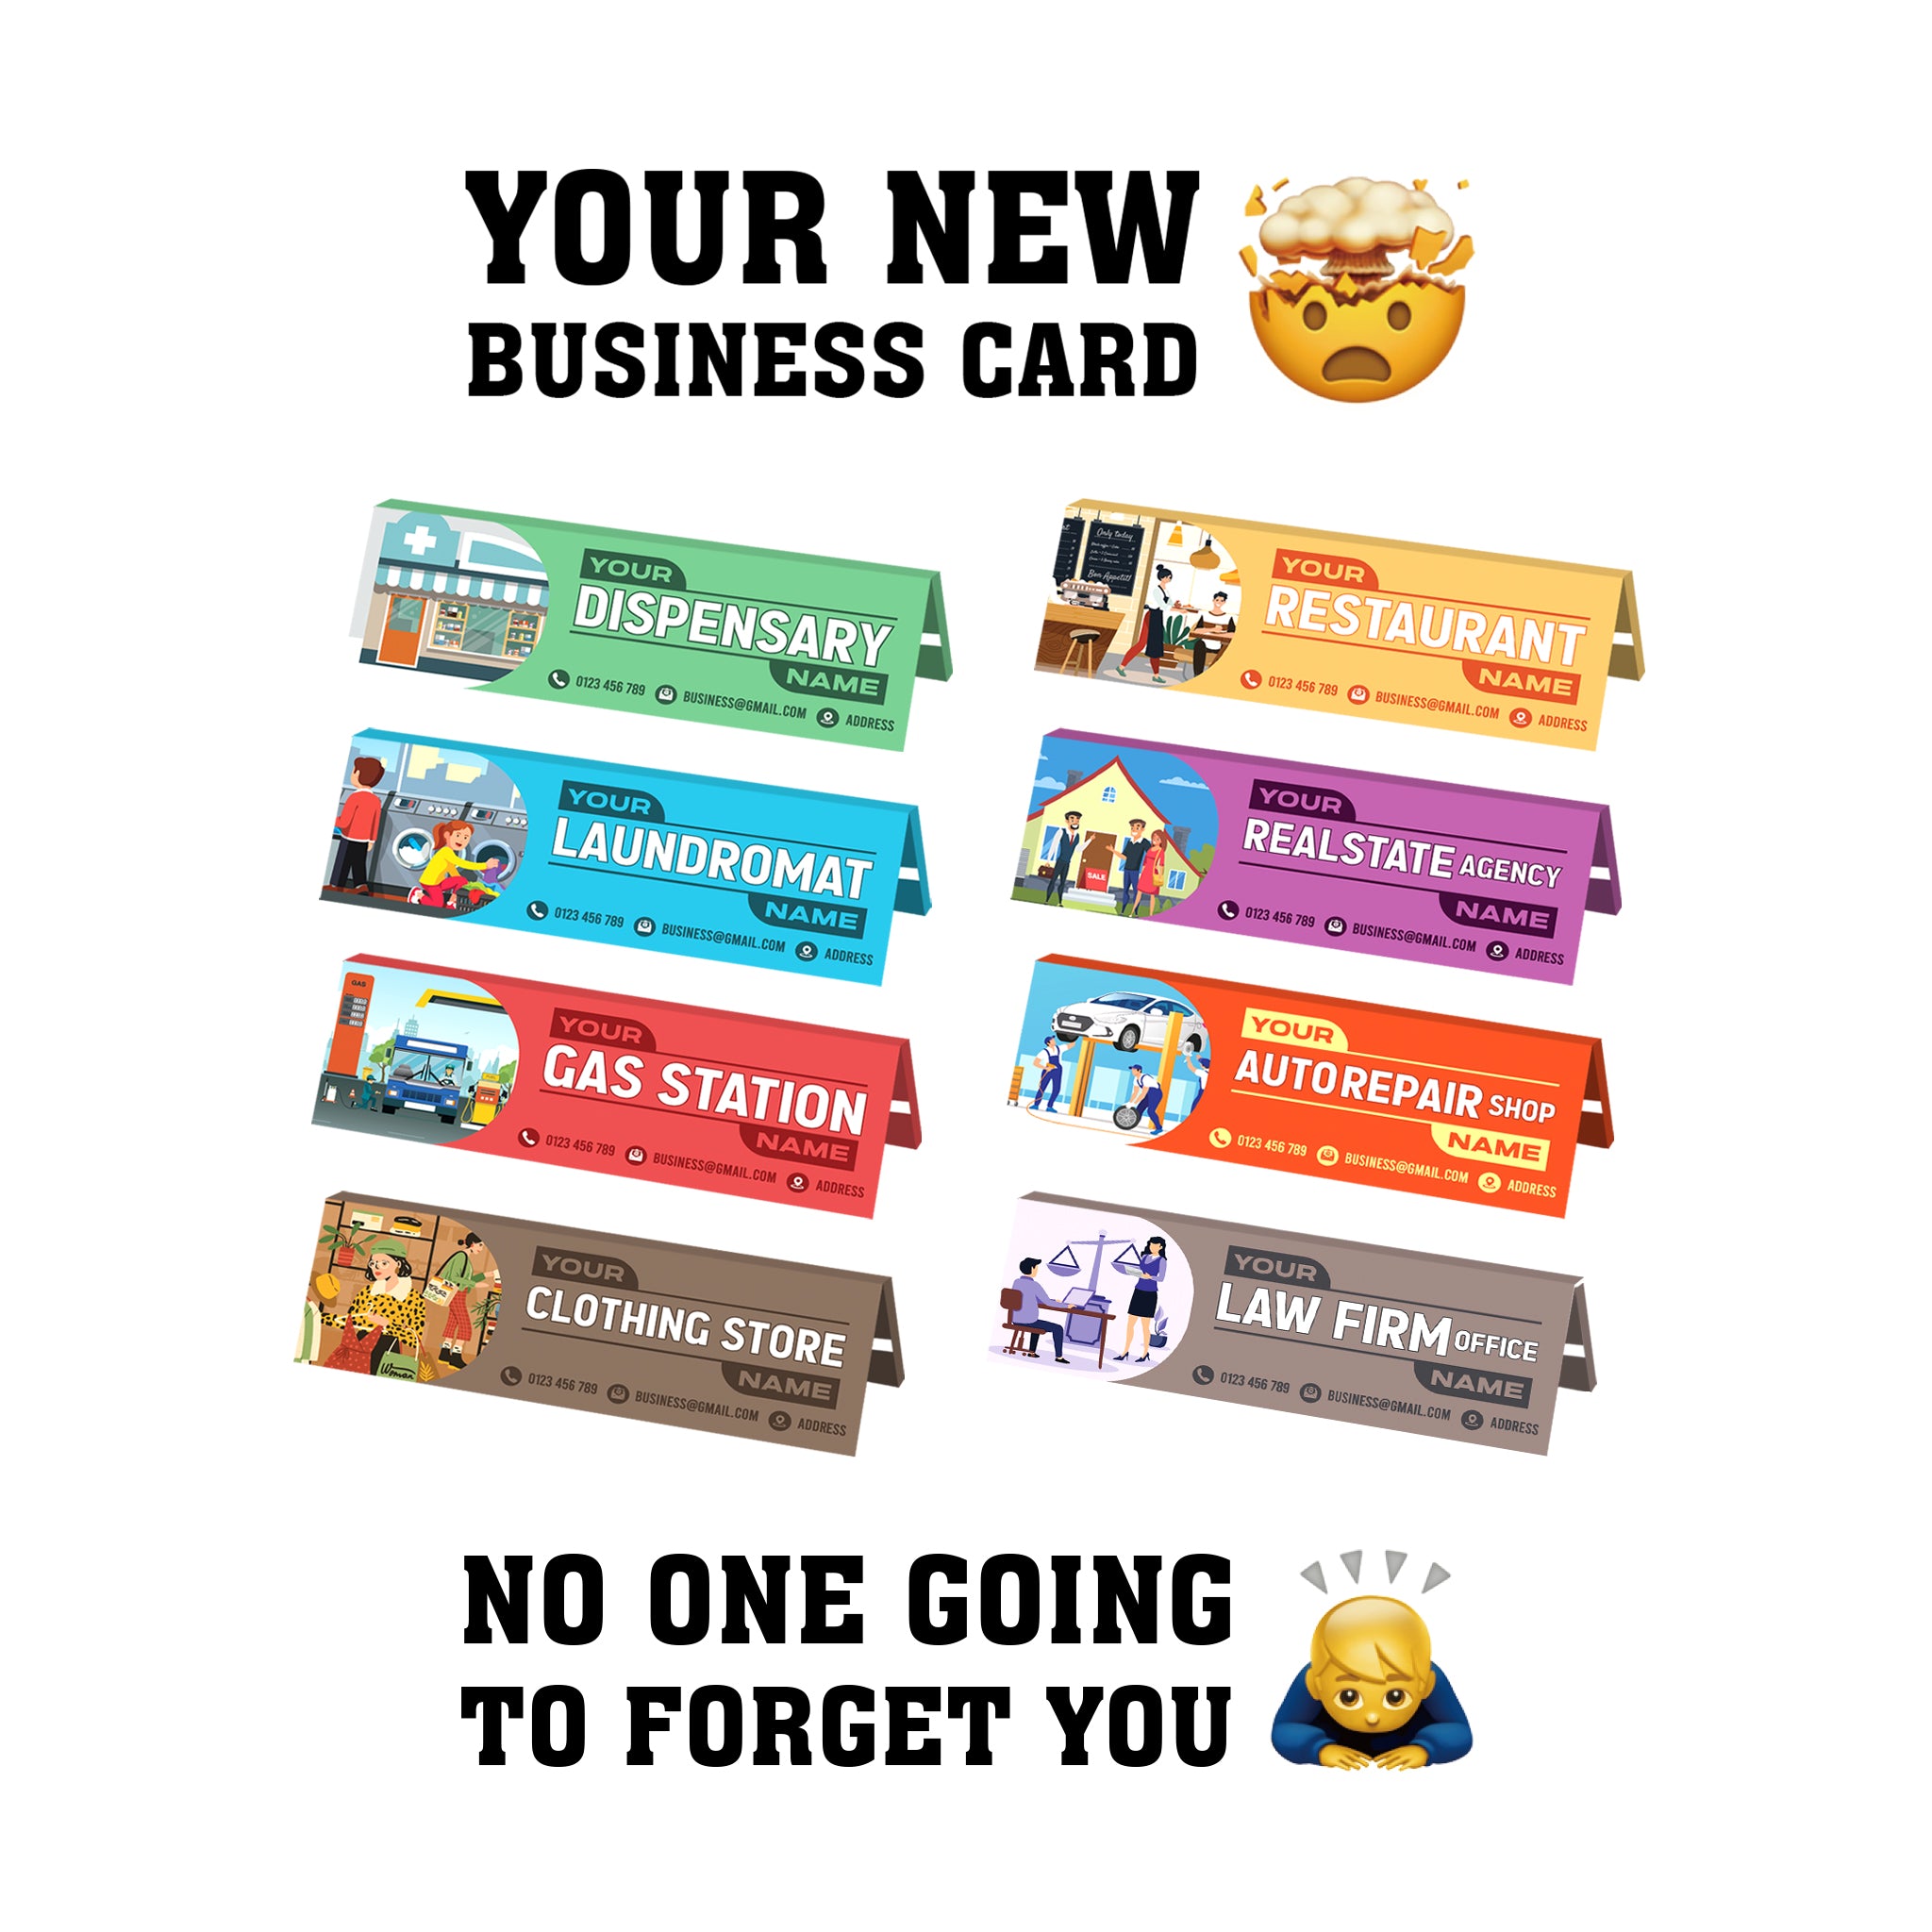 Hemp Paper - Hemp Business Card Stock - 100 cards